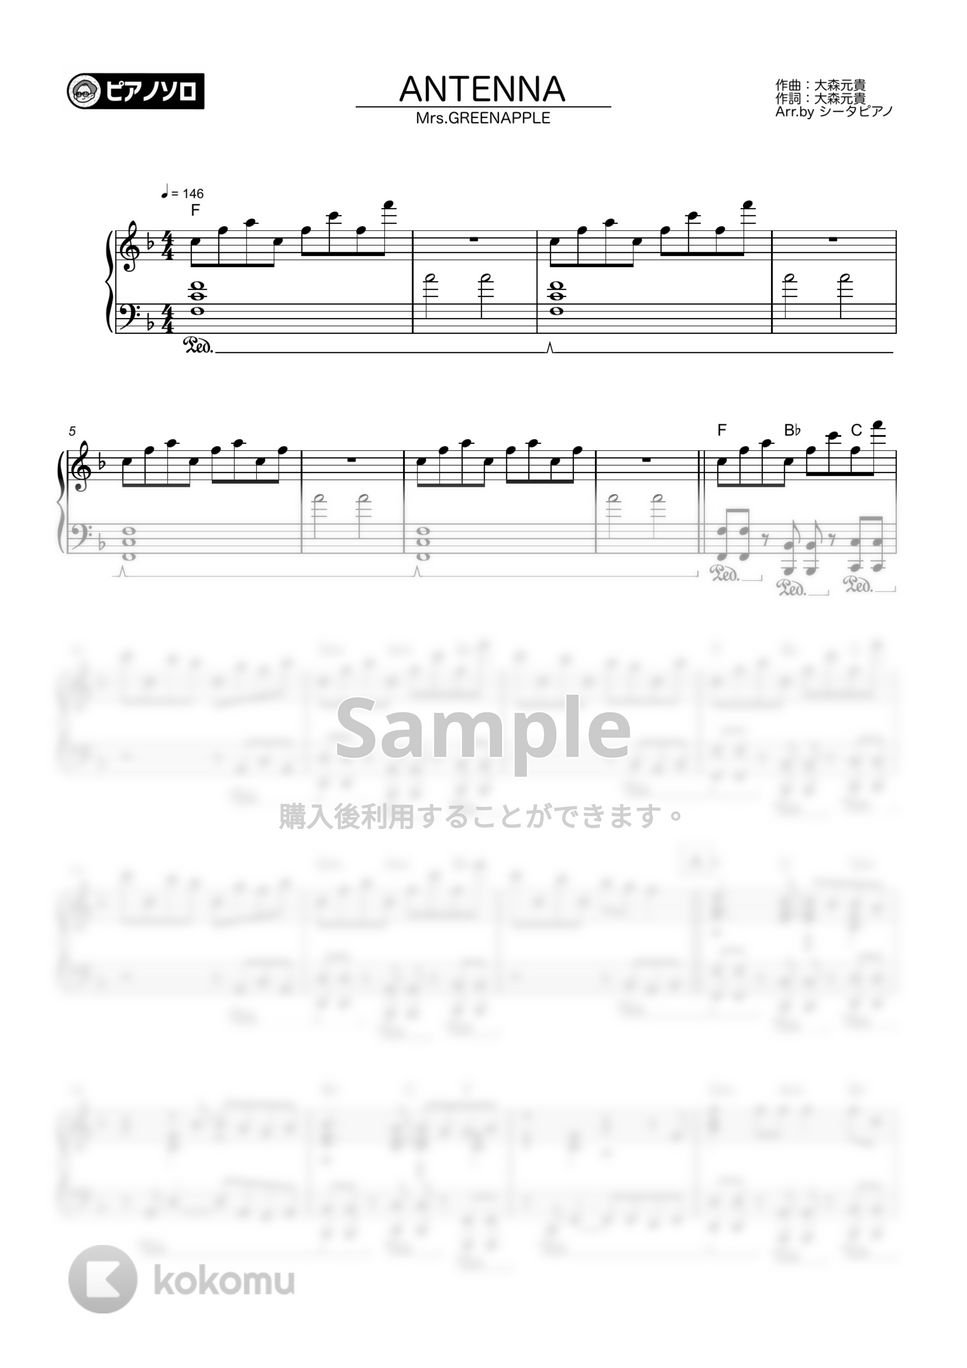 Mrs.GREENAPPLE - ANTENNA by シータピアノ